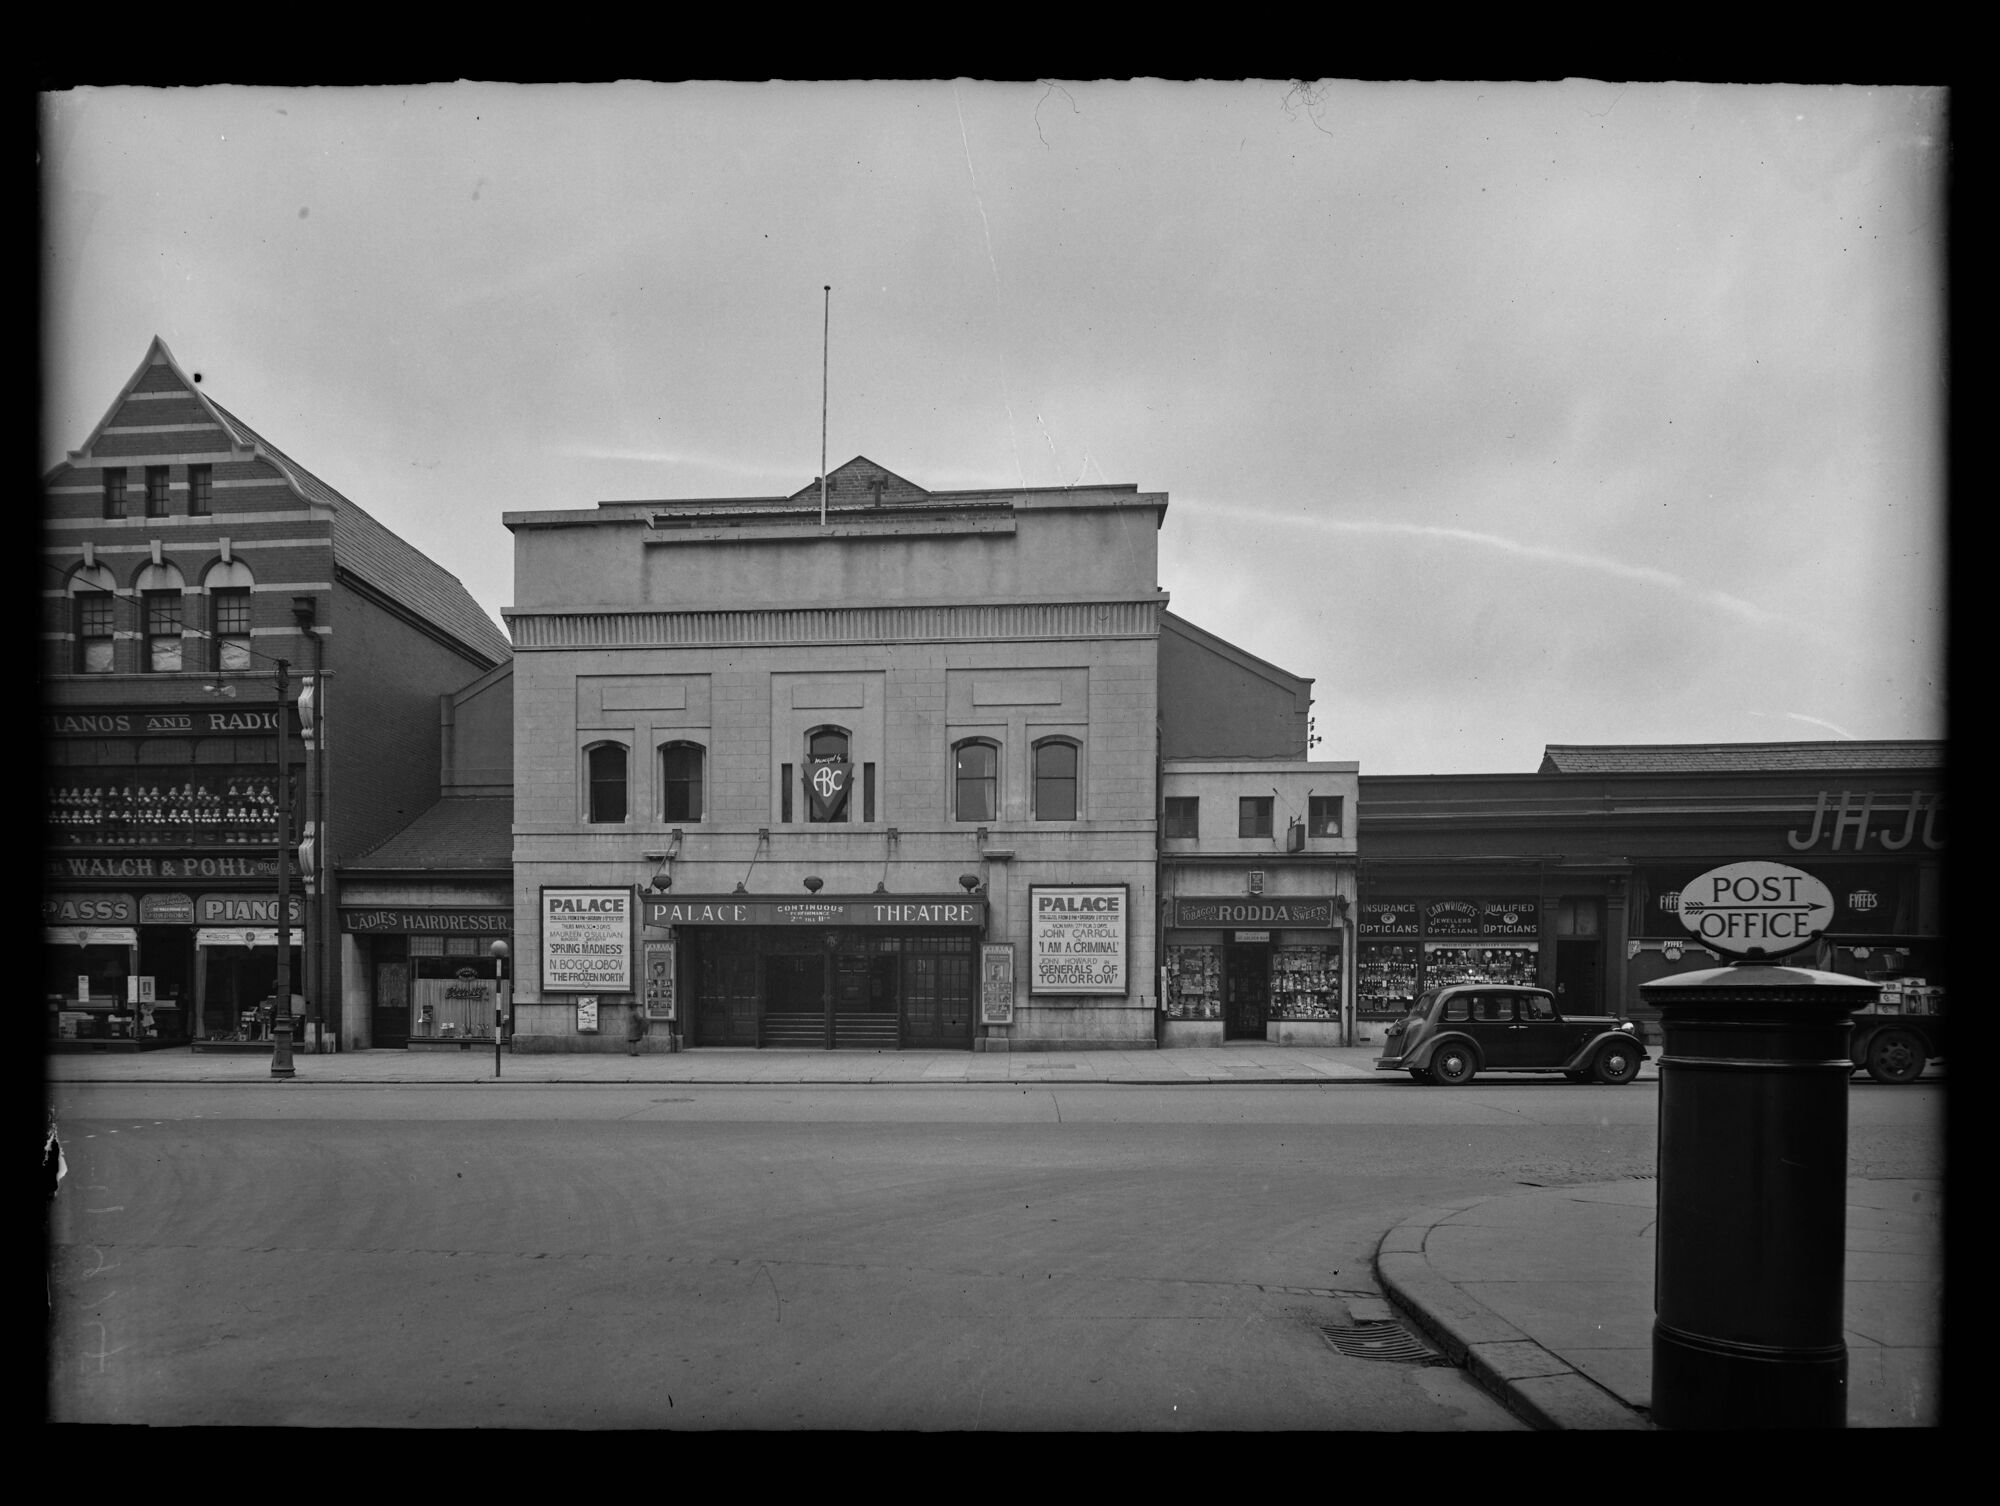 Palace Theatre, Duke Street, Barrow-in-Furness